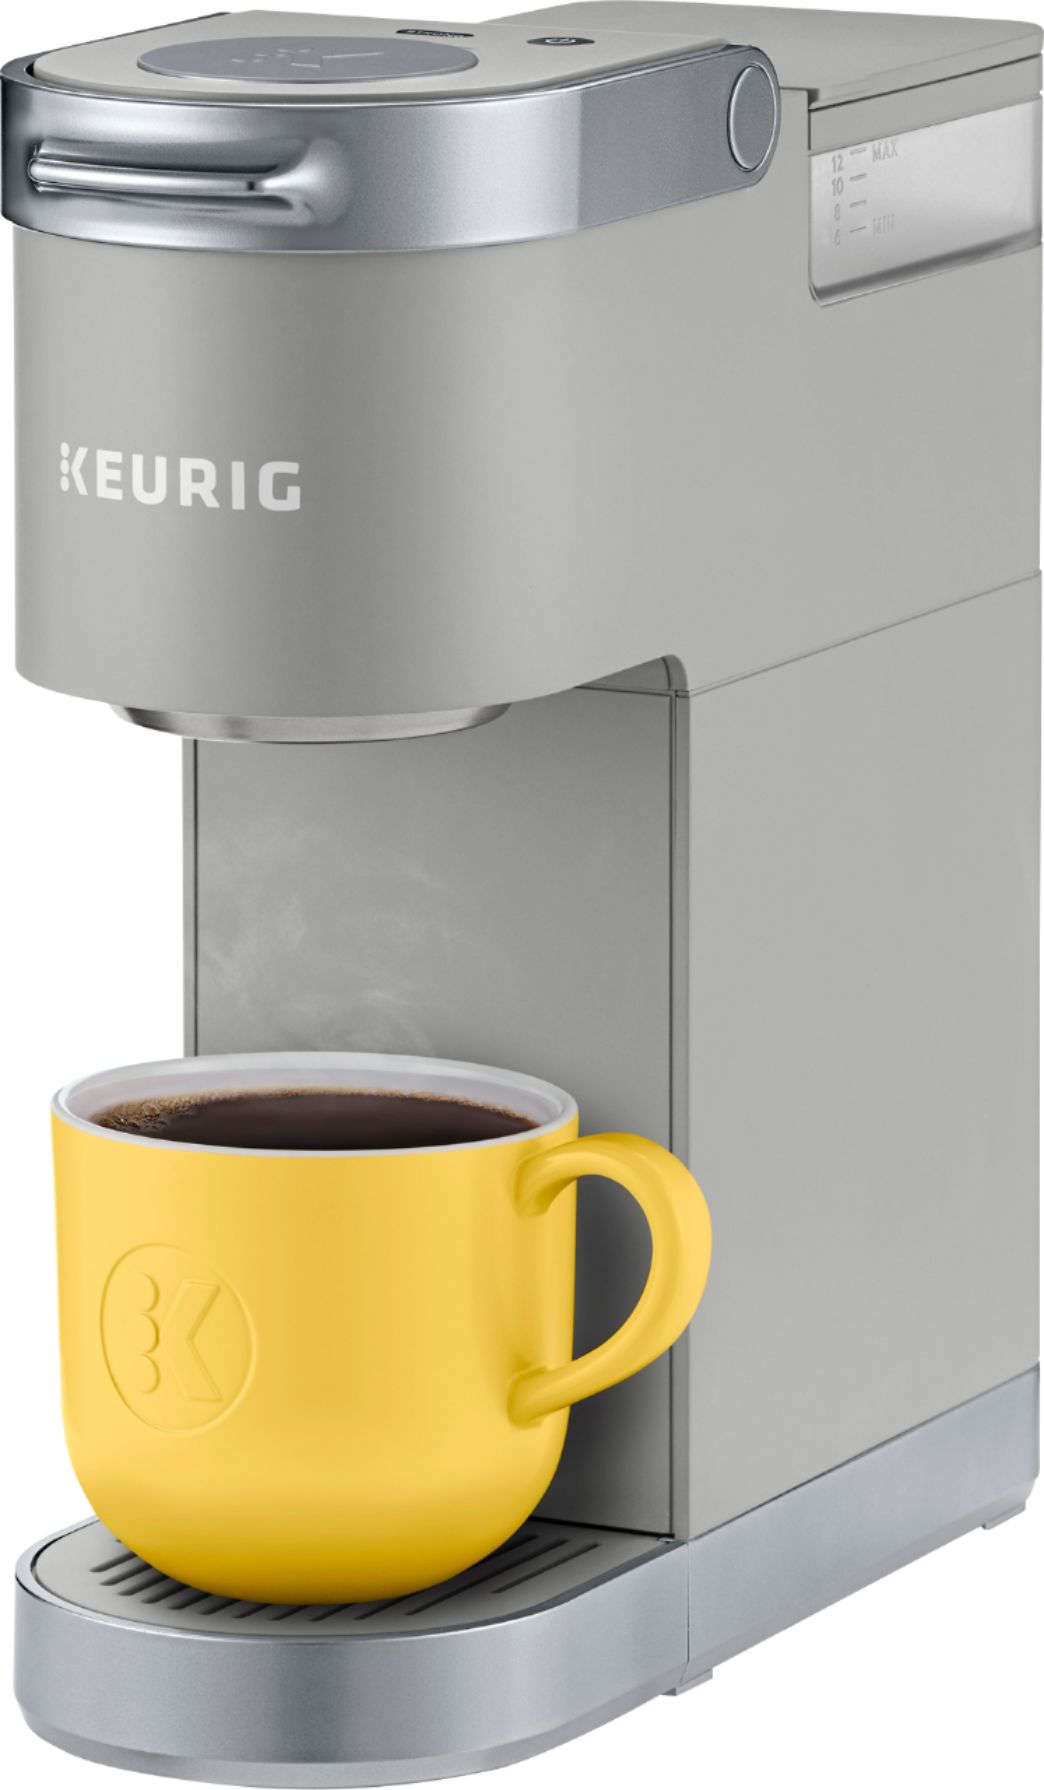  Keurig K-Slim Plus ICED Coffee Maker (Gray), Single